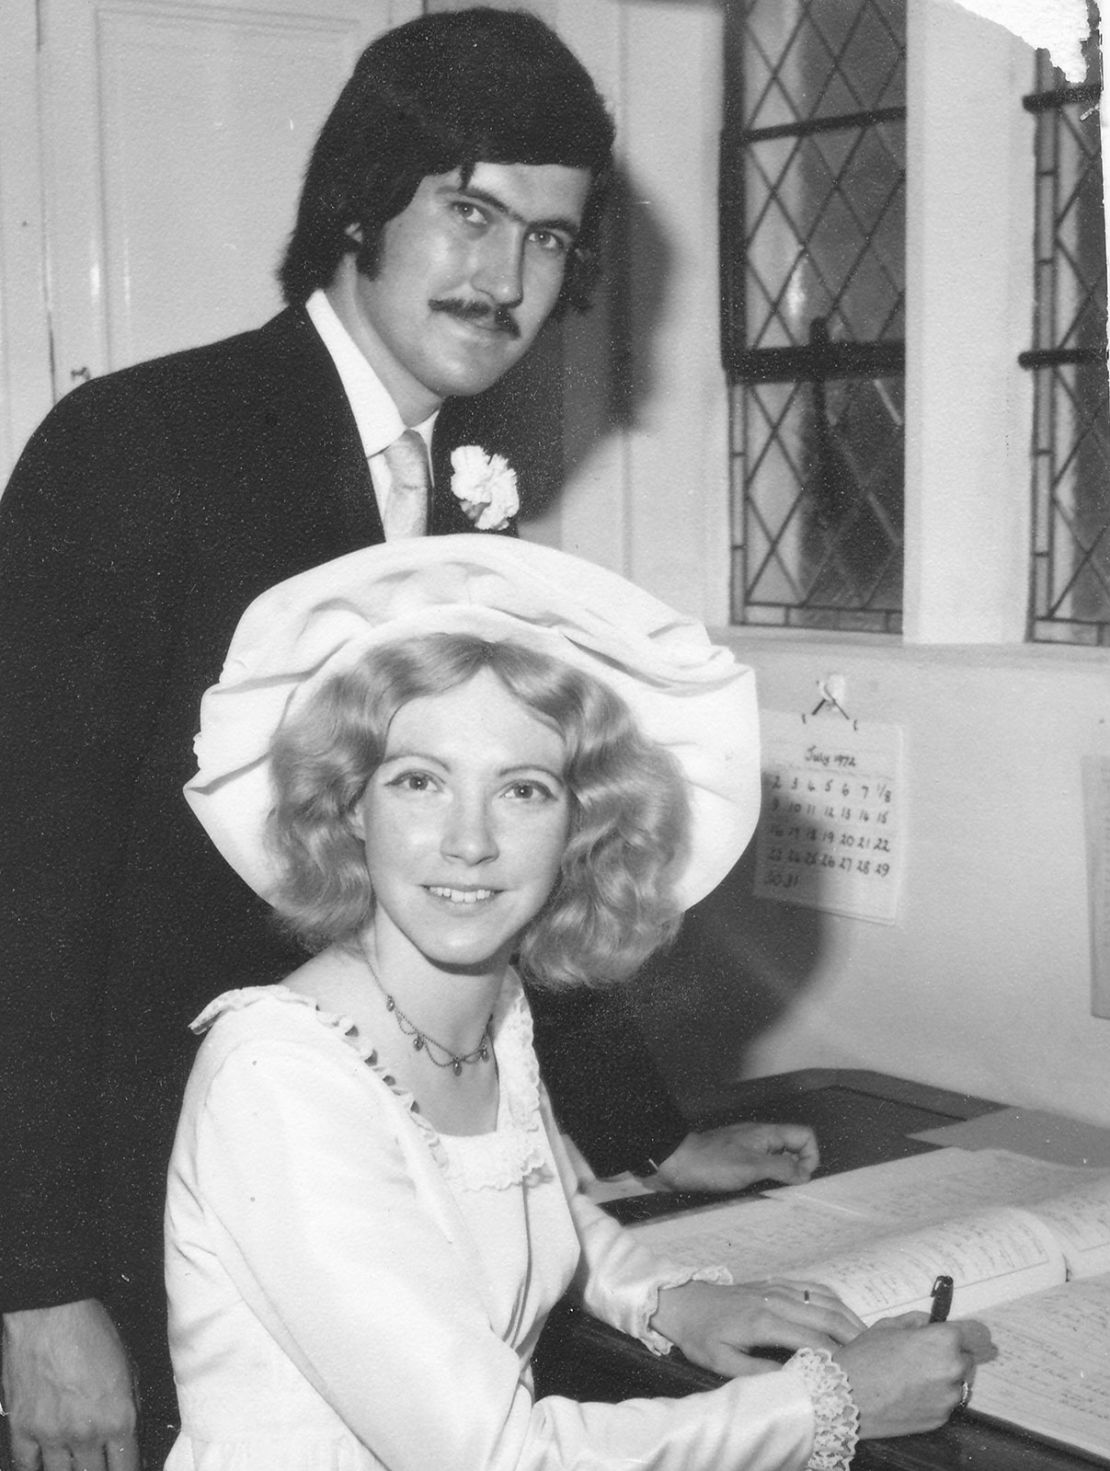 George and Linda Porter